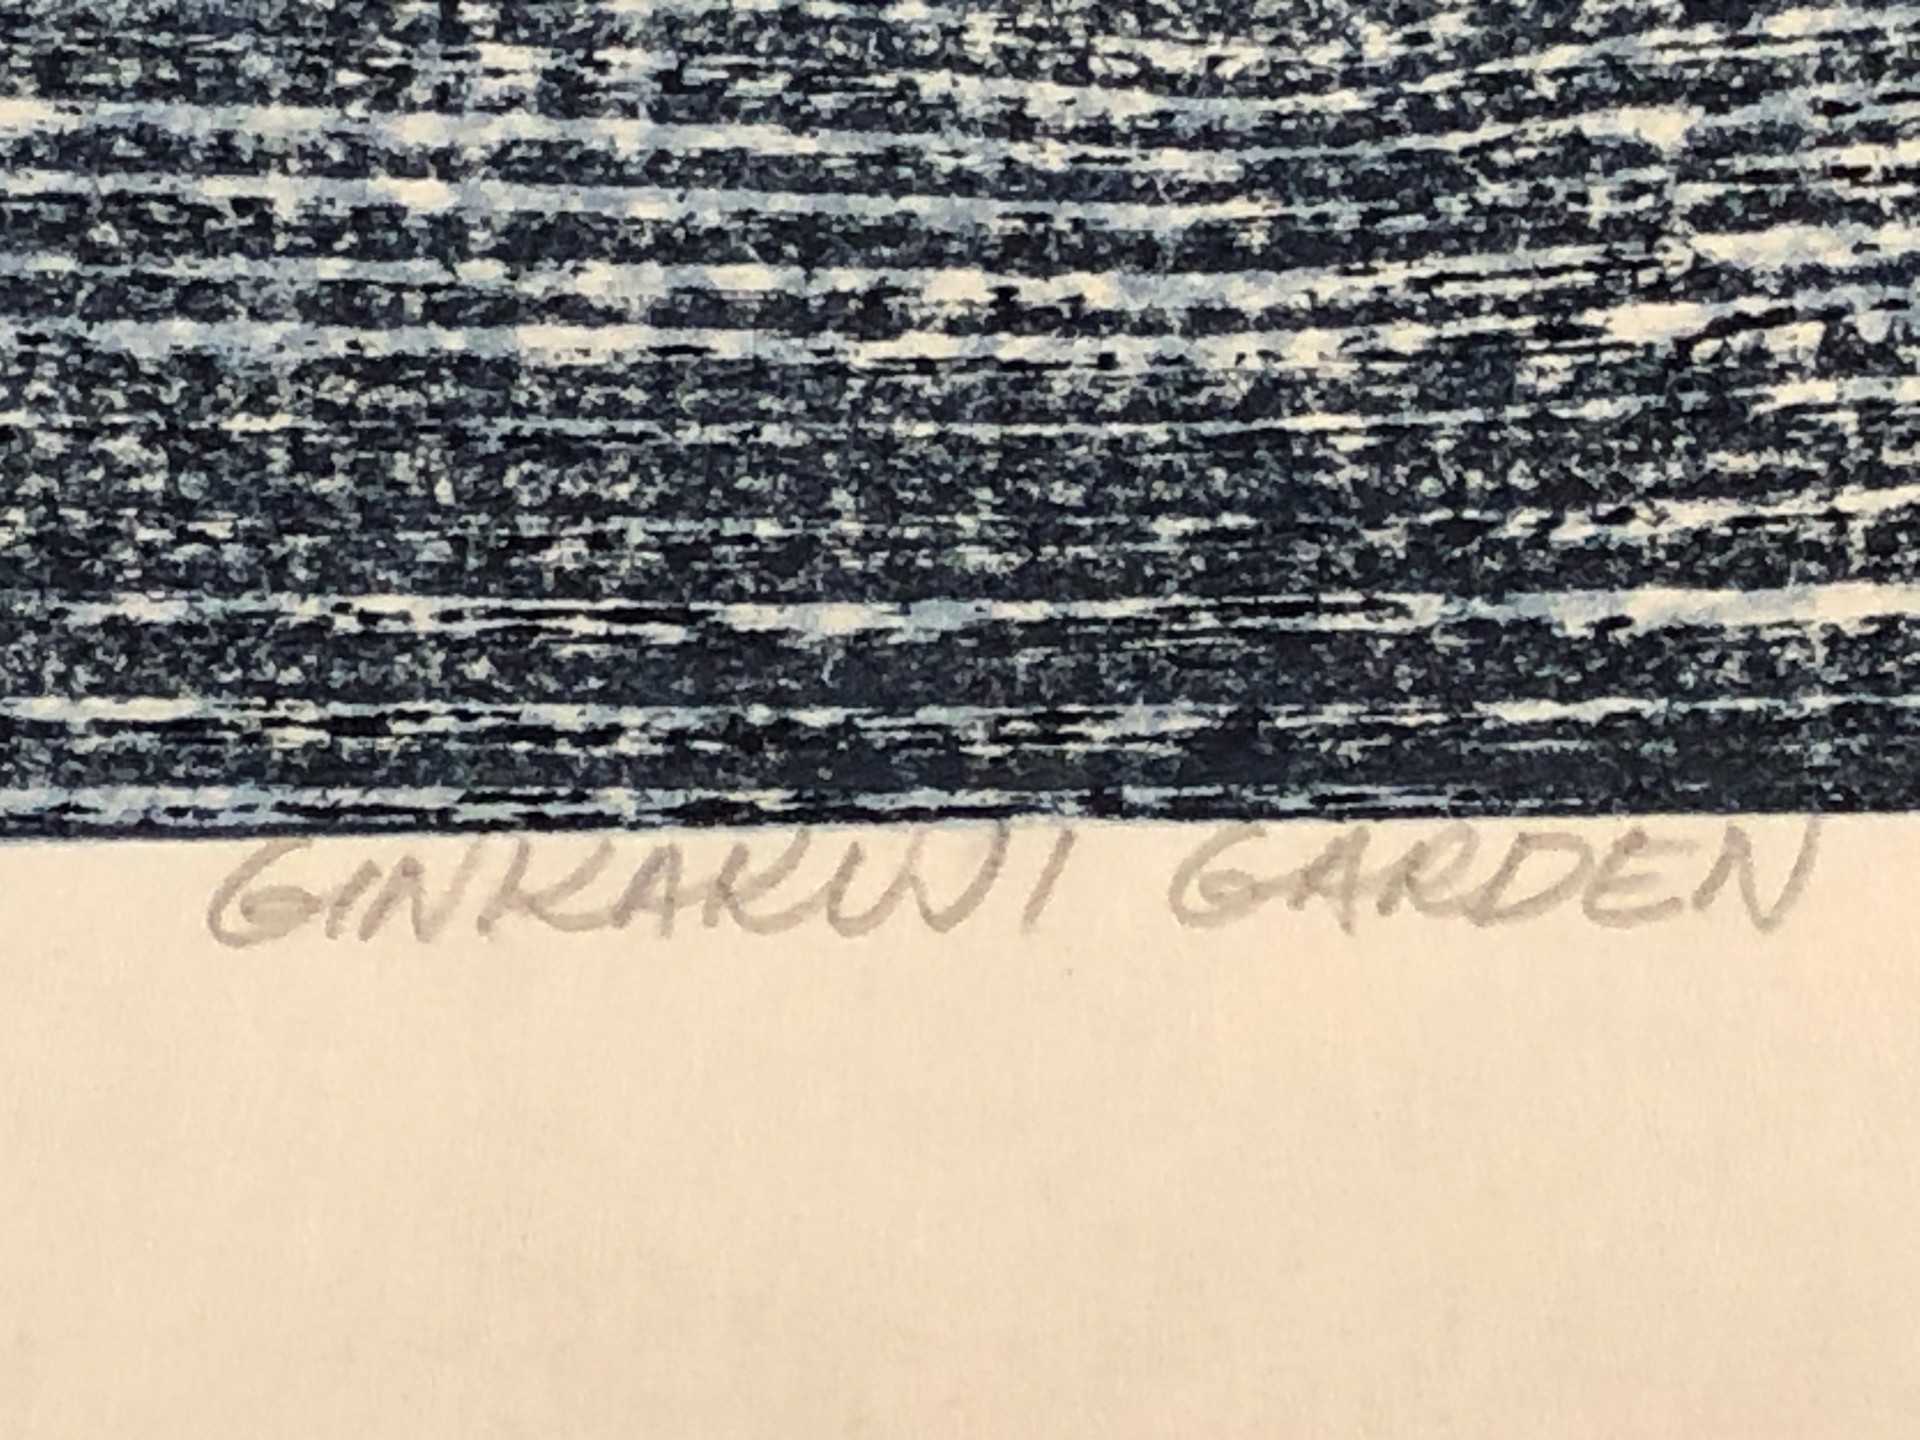 Ginkakuji Garden by Clifton Karhu